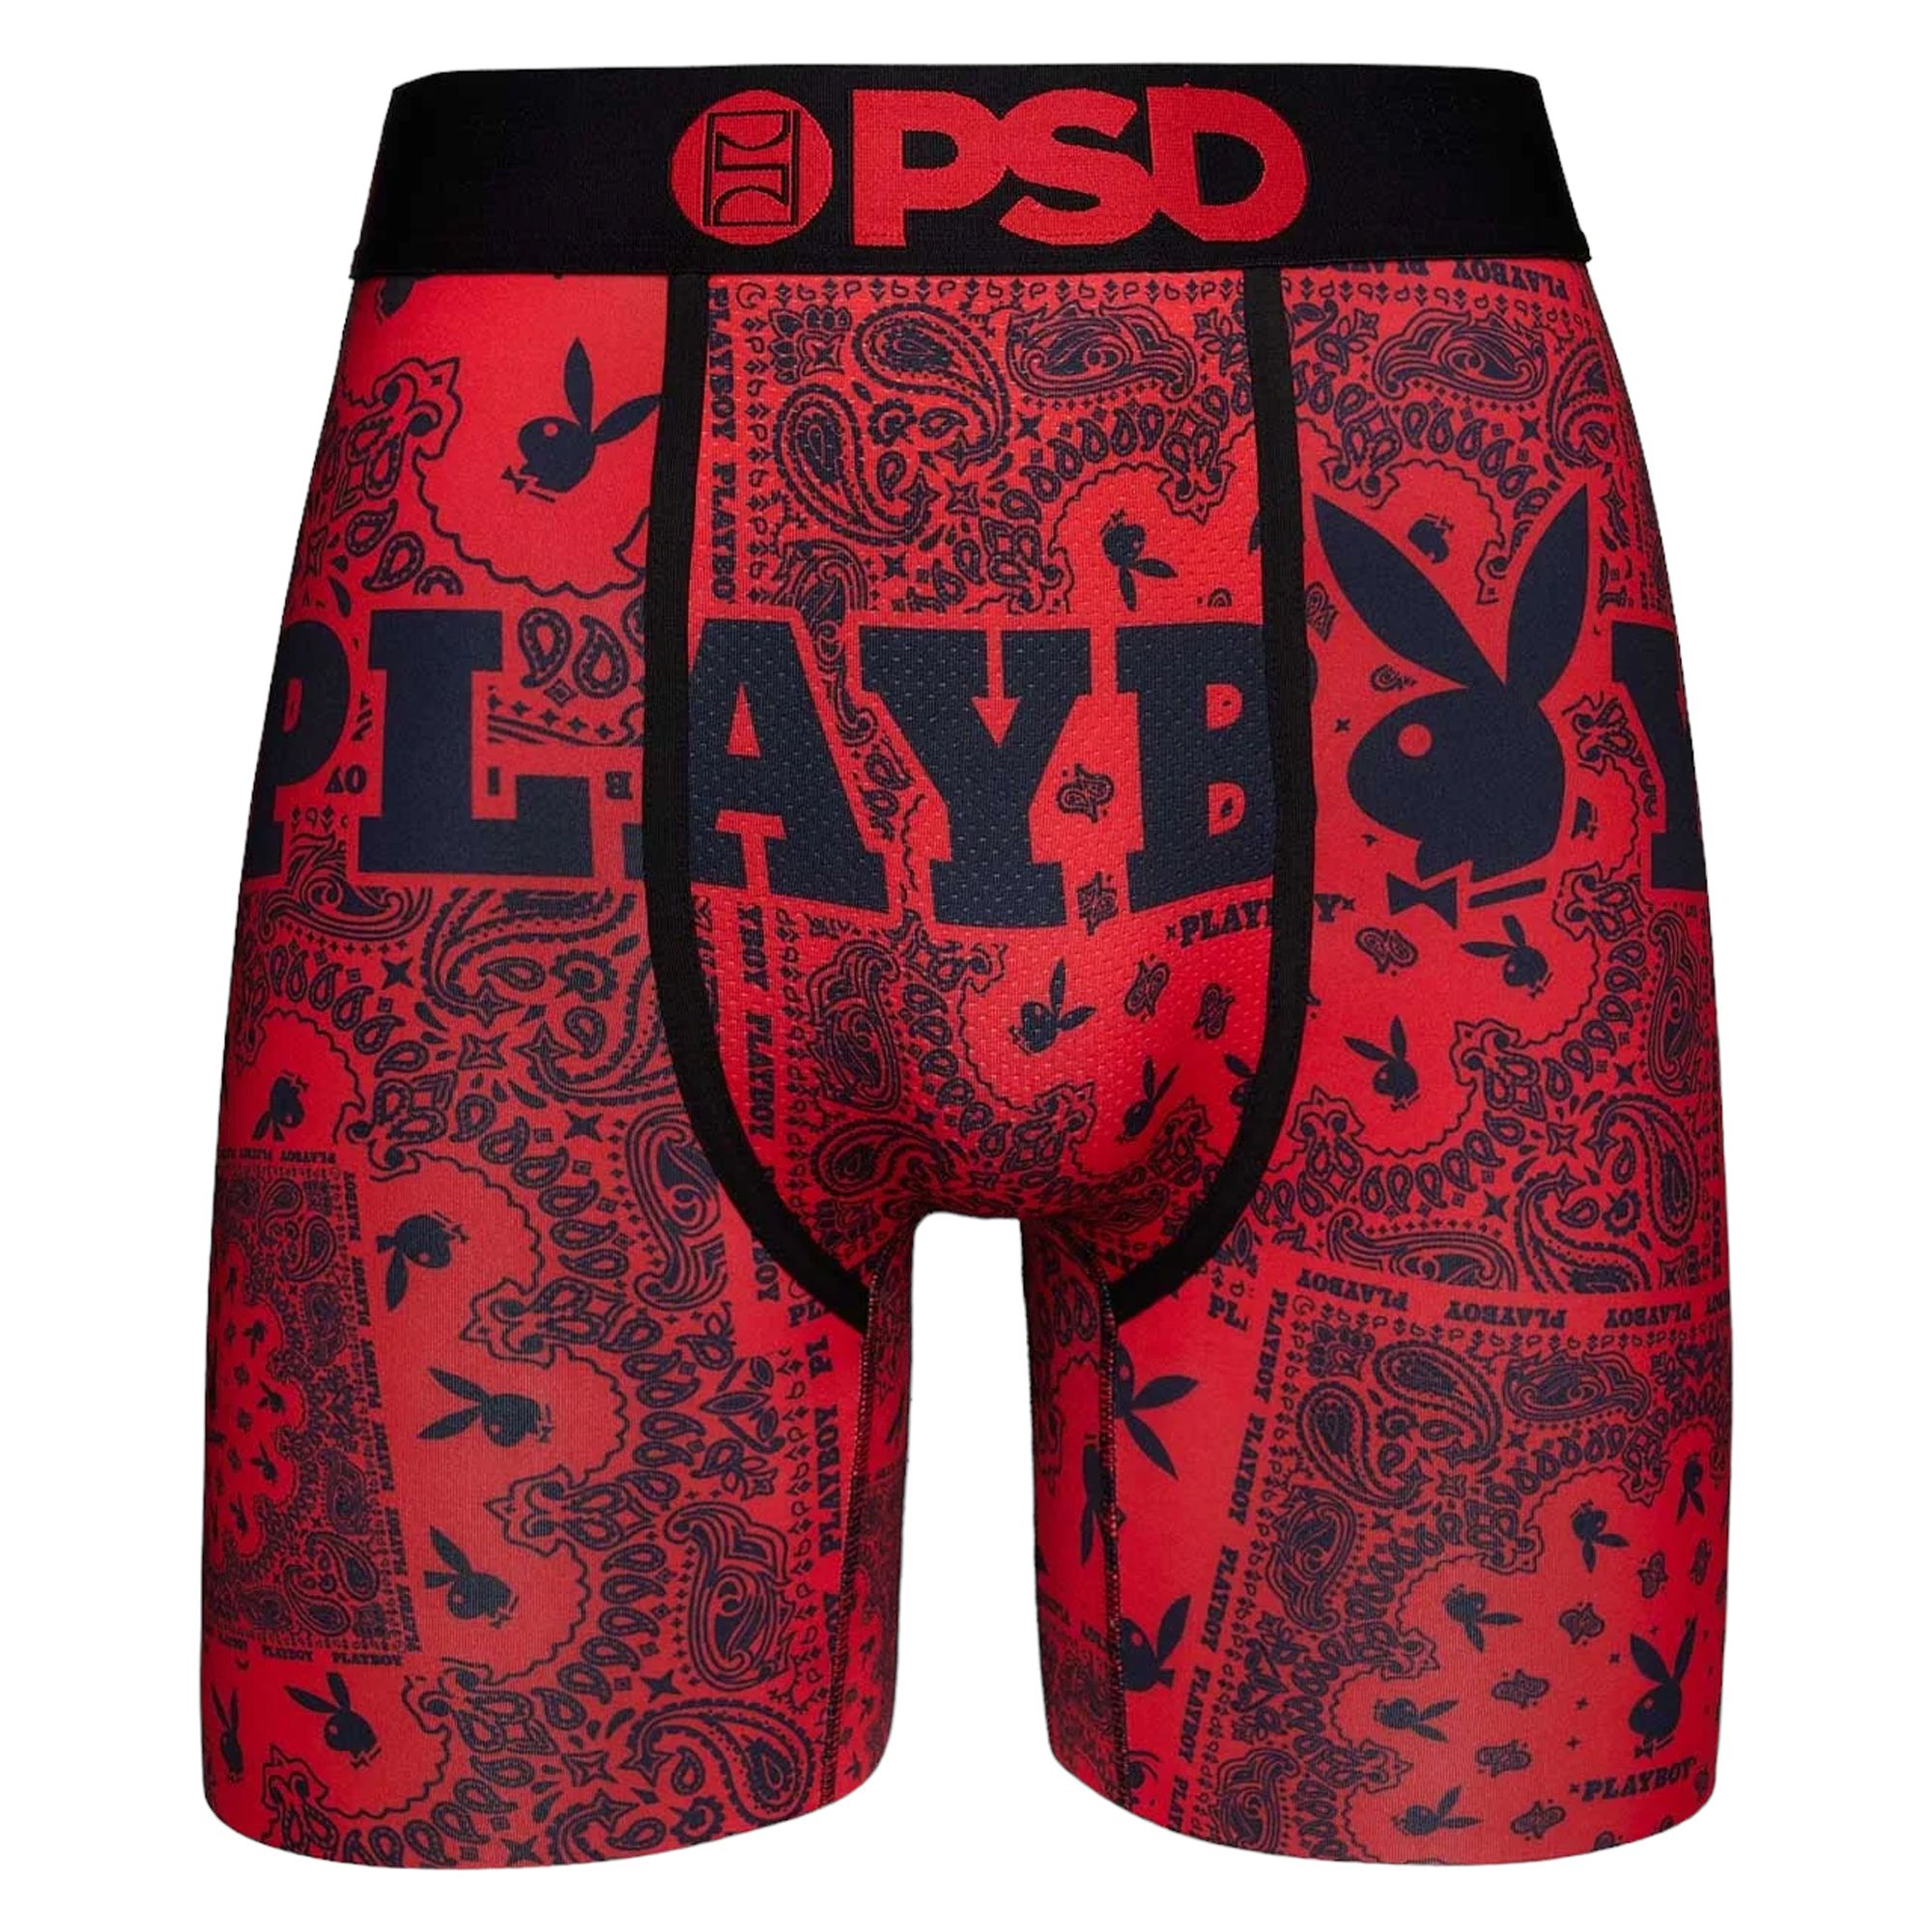 PSD Men's Rich Bandana Black Boxer Brief Underwear